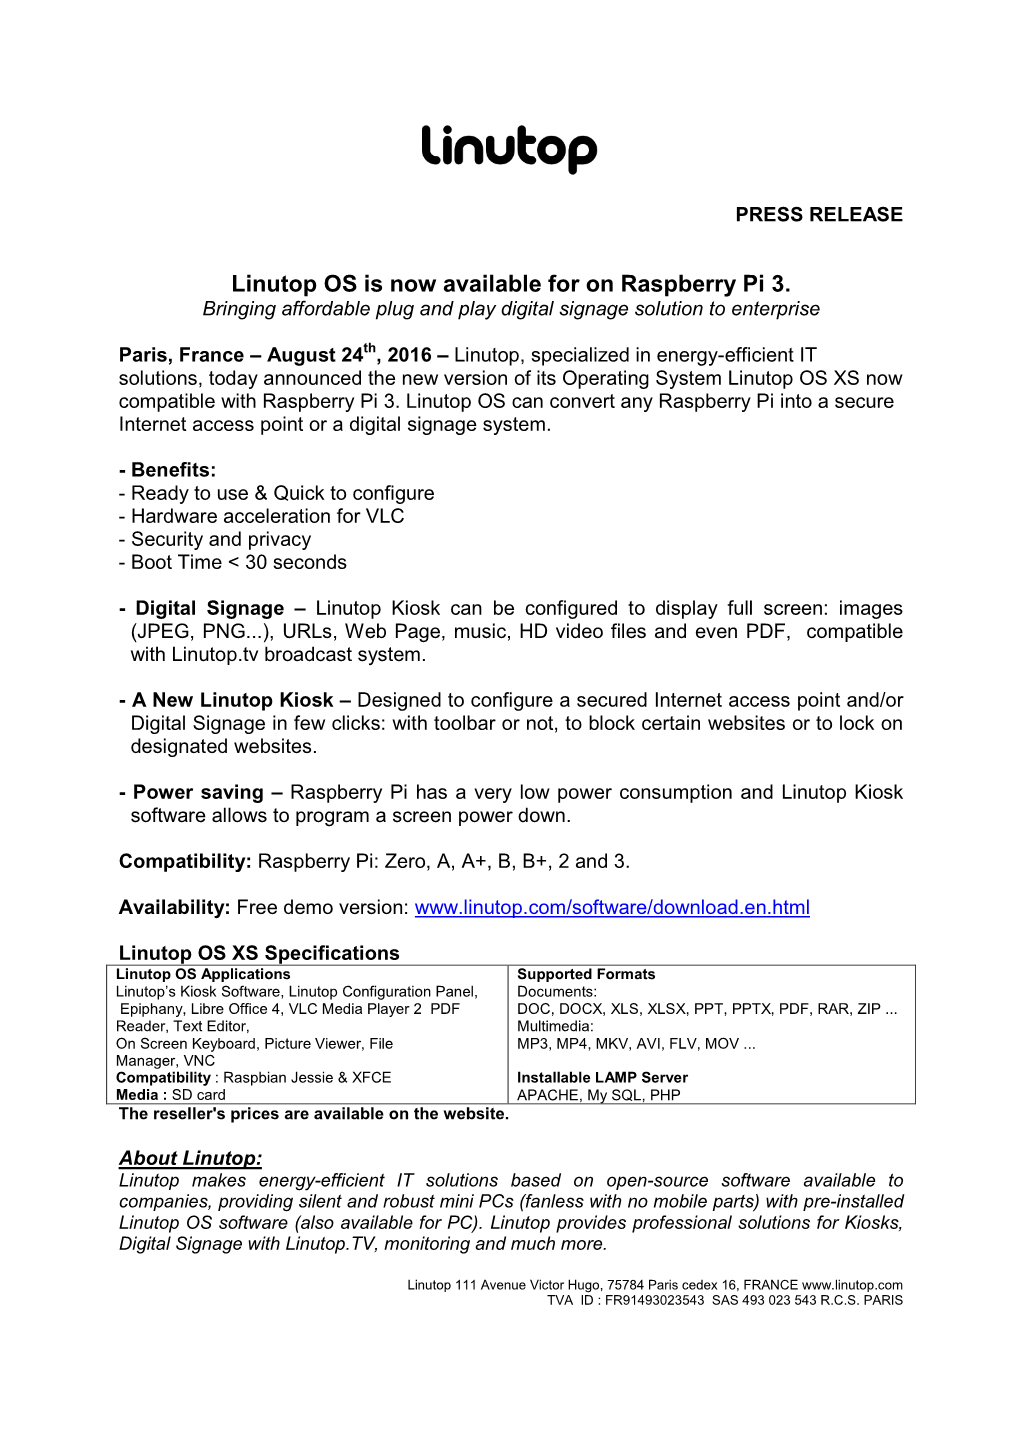 Press Release Linutop OS XS for Raspberry PI3 Endraftb